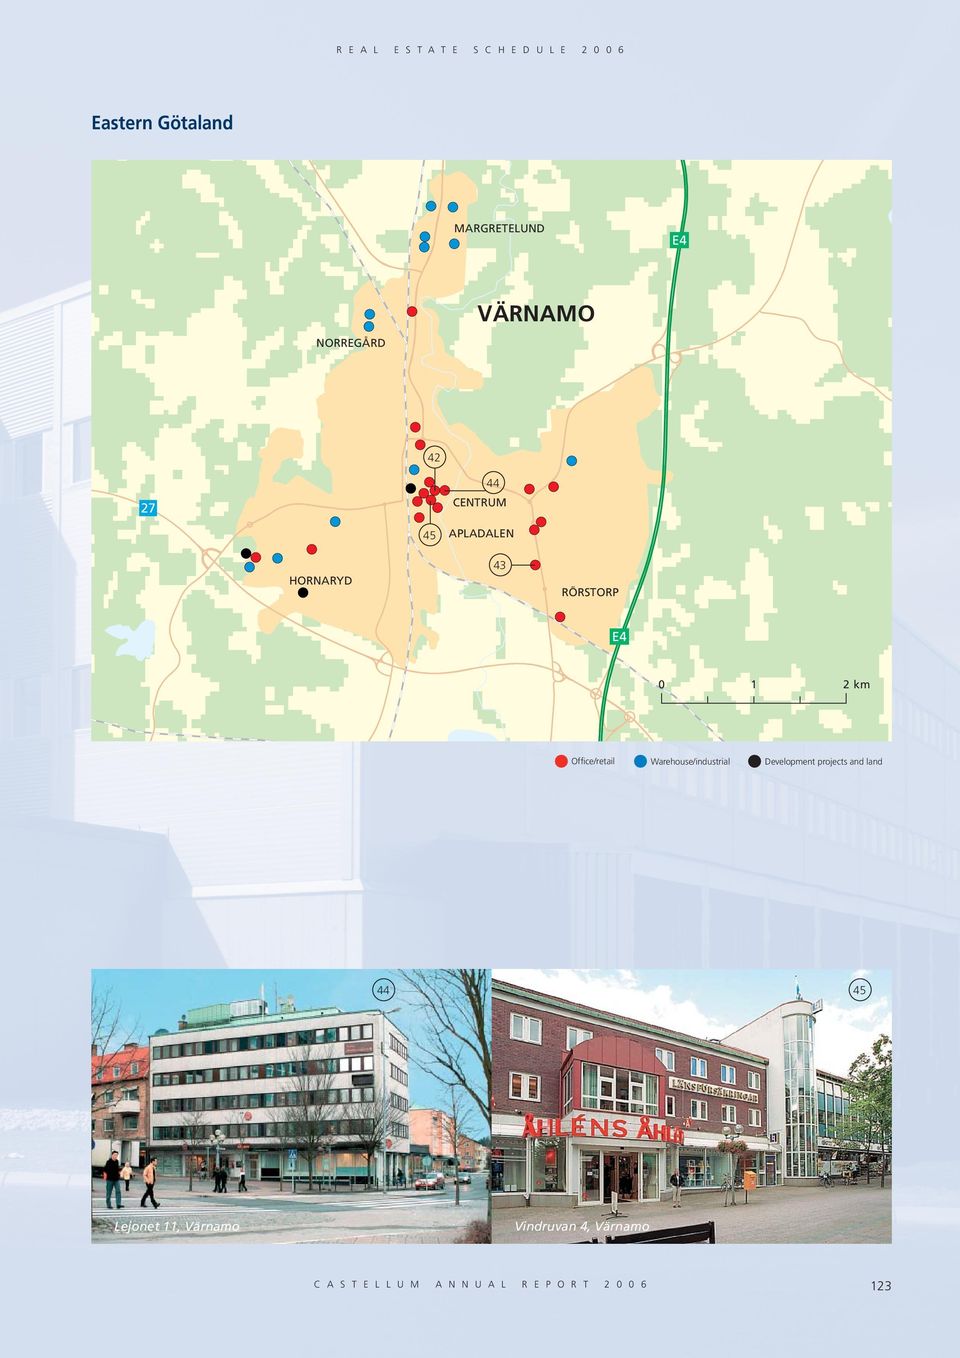 RÖRSTORP /retail 44 1 2 km Development